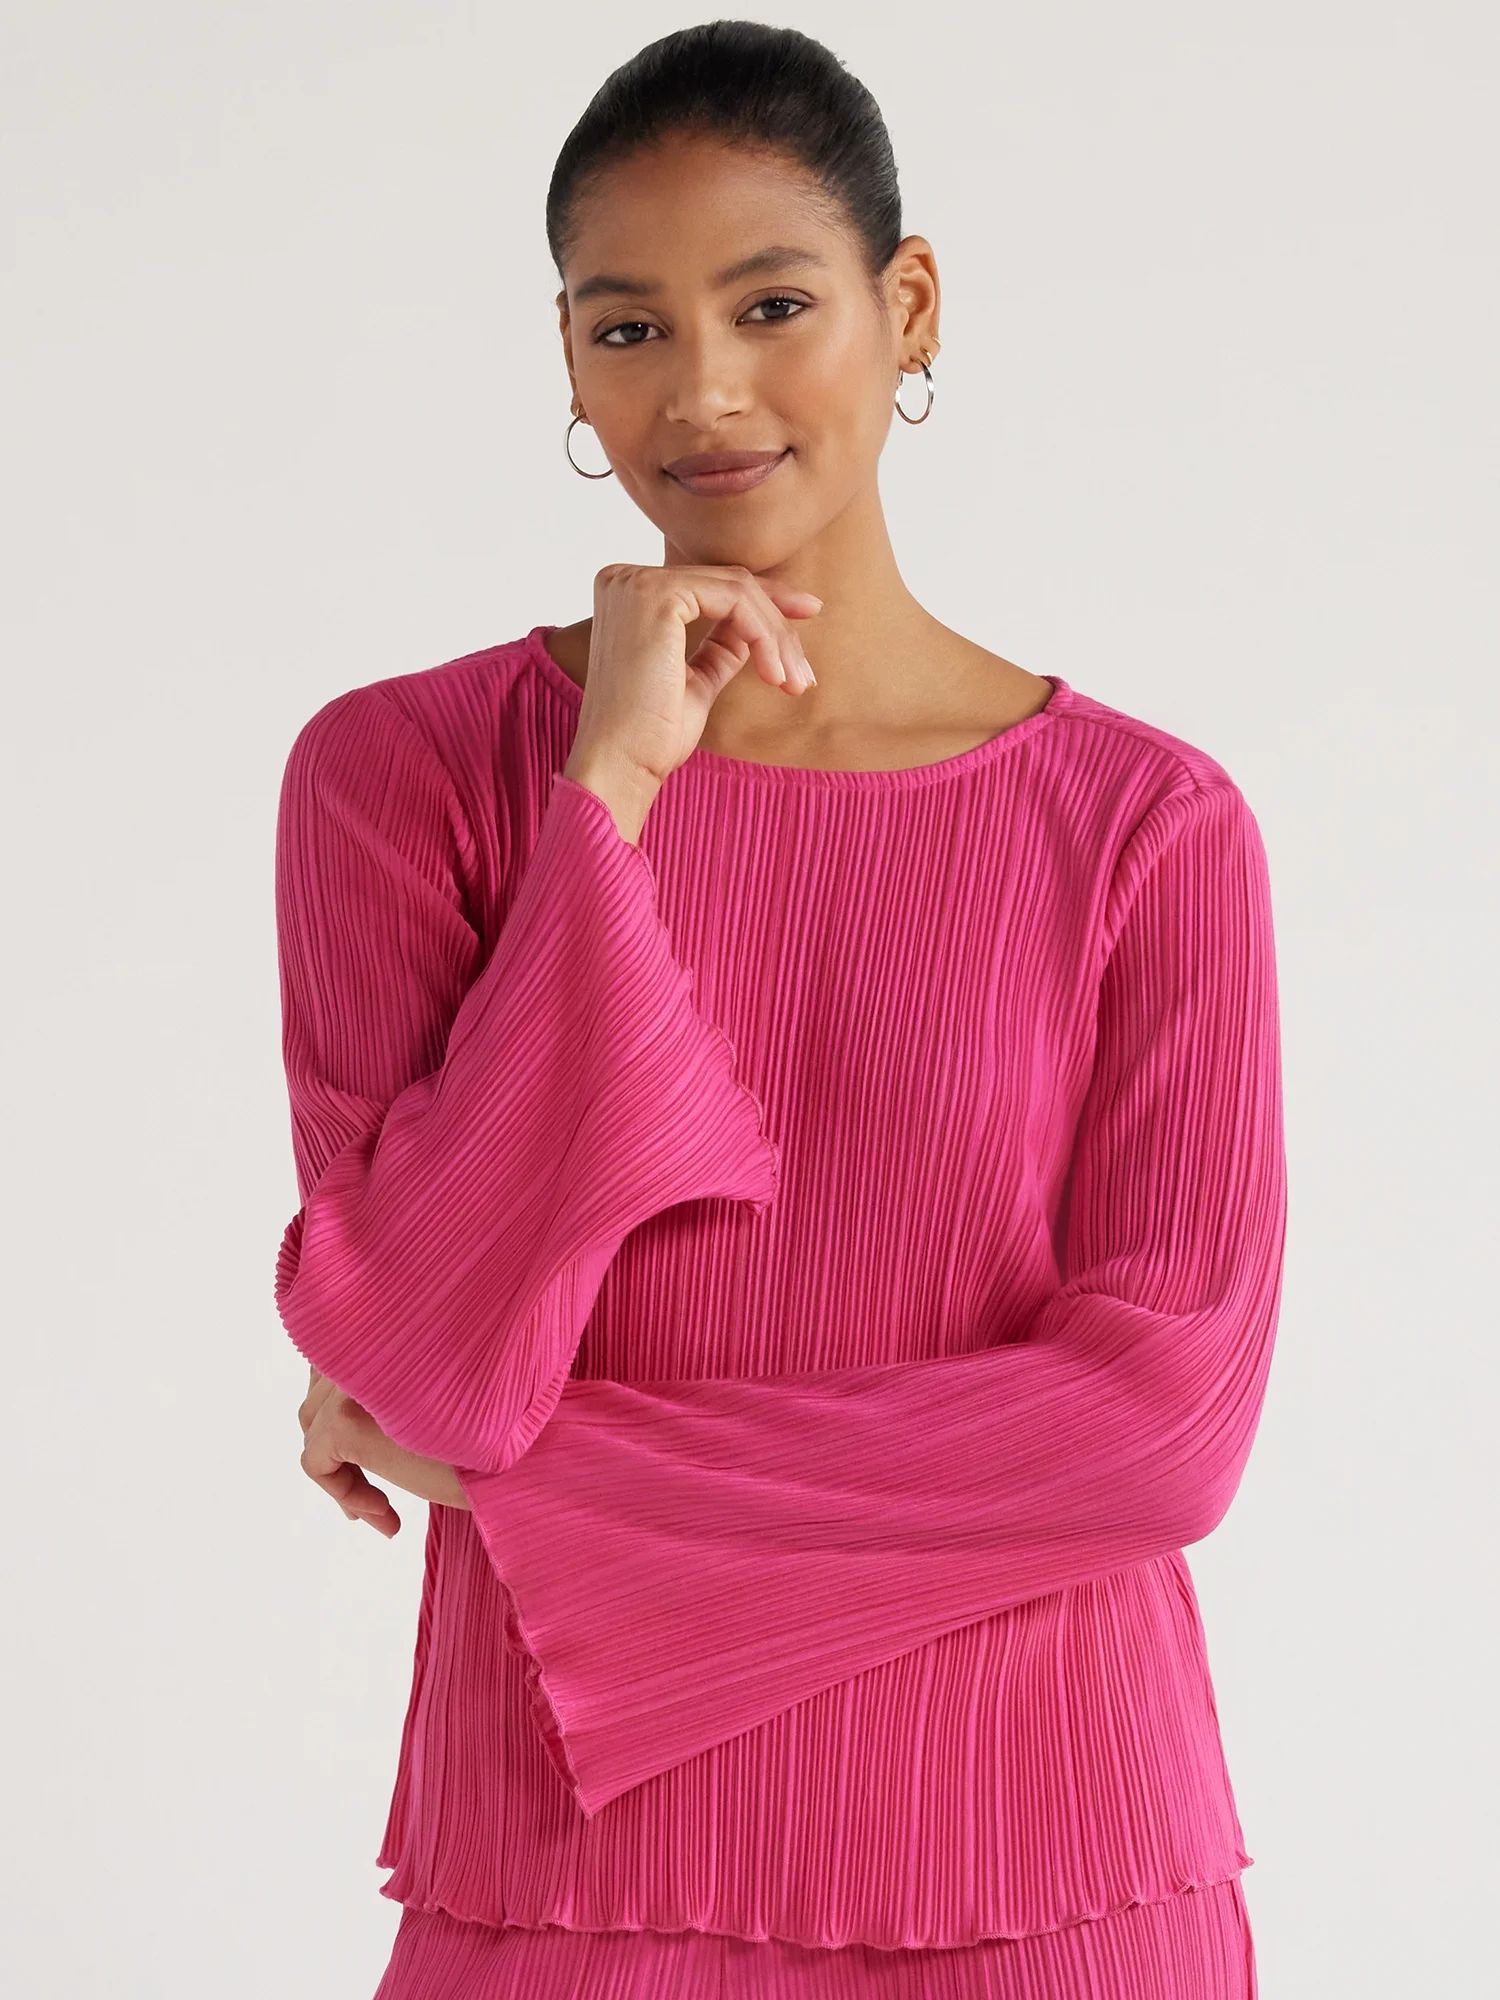 Scoop’s Crinkle Knit Tunic Top, Sizes XS-XXL | Walmart (US)